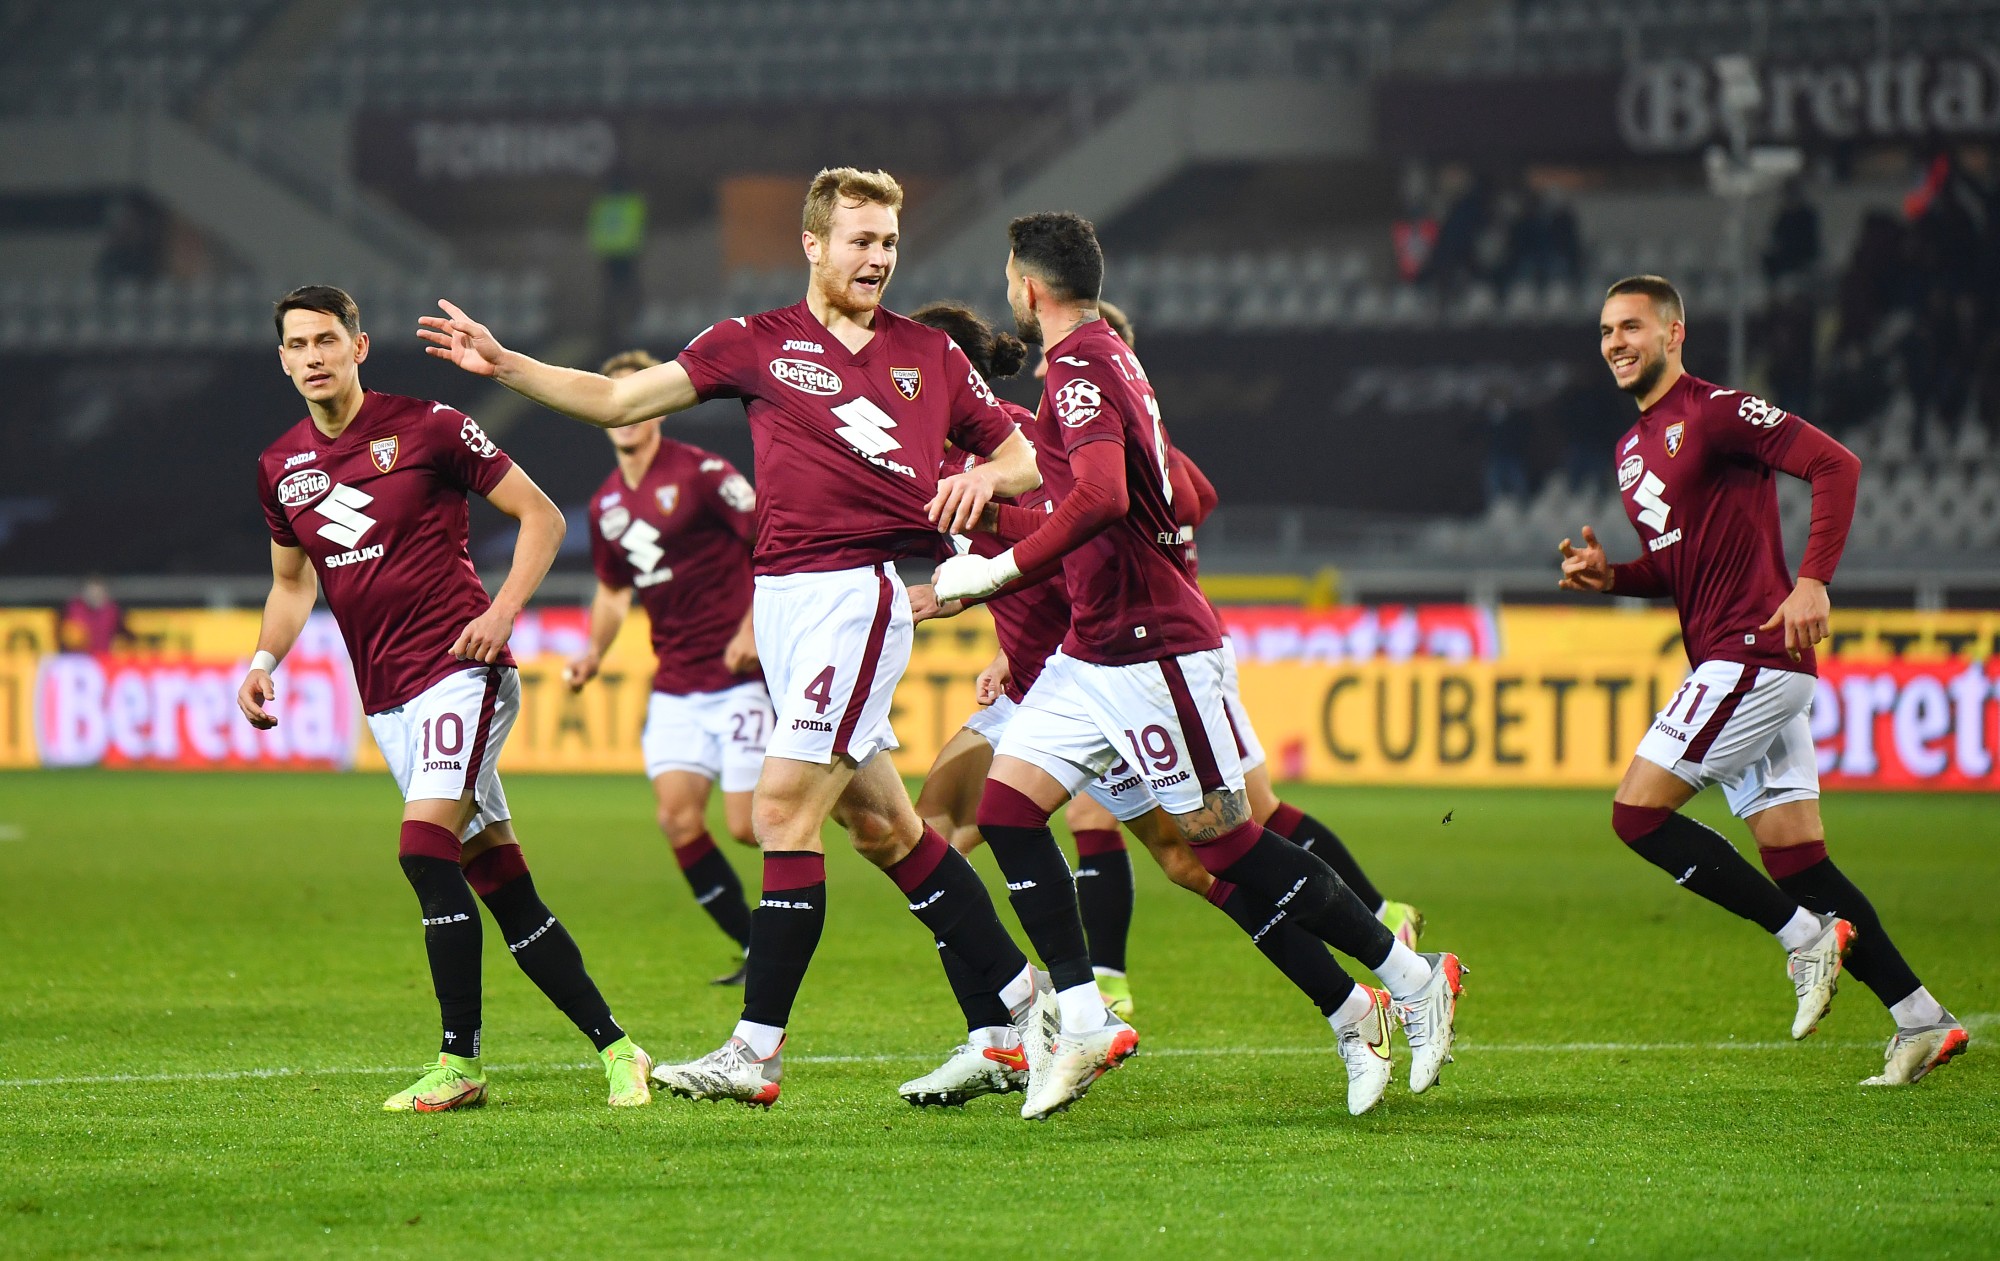 VIDEO - Torino-Verona 1-0, Serie A: gol e highlights della partita.